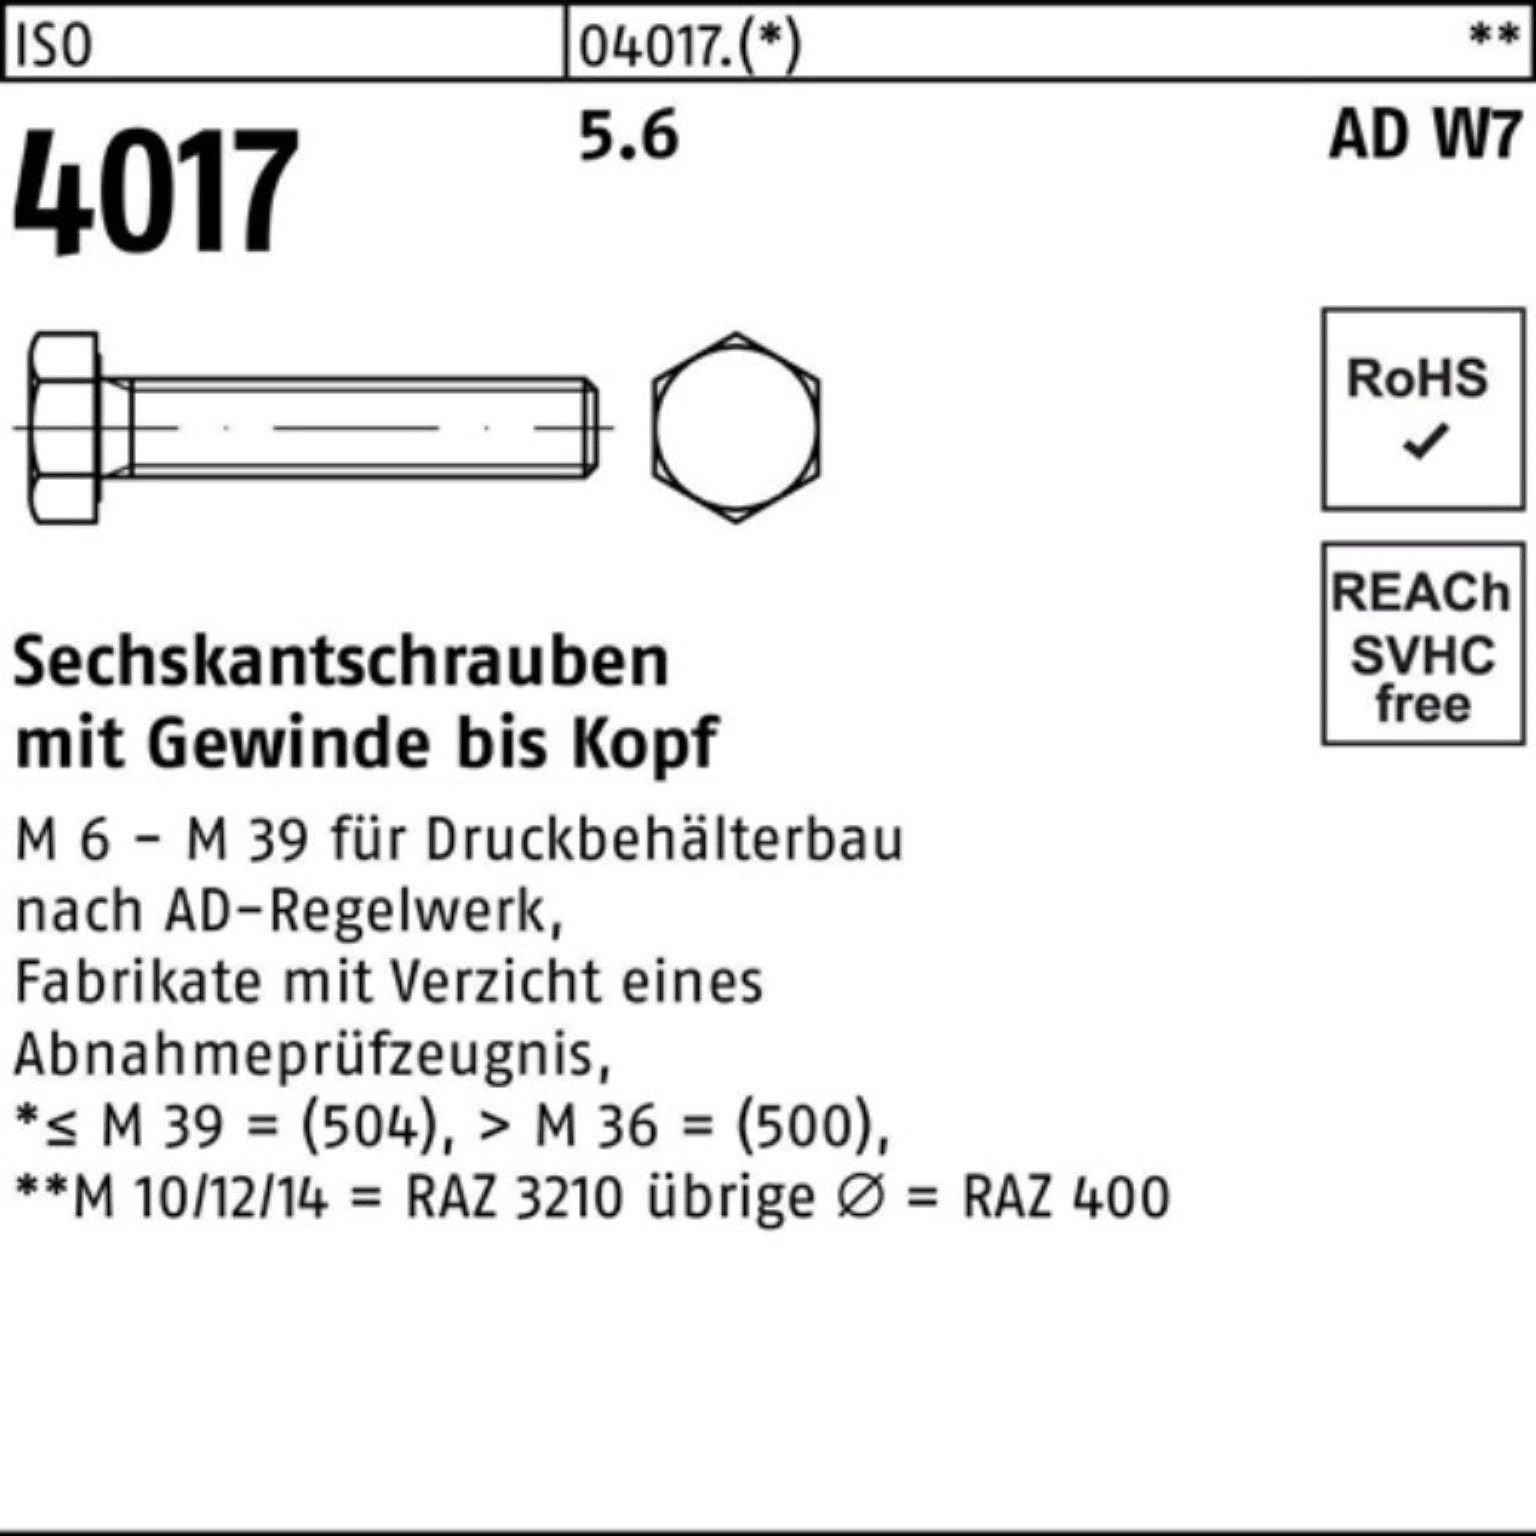 Top-Marke Bufab Sechskantschraube 200er M10x 5.6 VG Stück Pack ISO AD 200 Sechskantschraube W7 25 4017